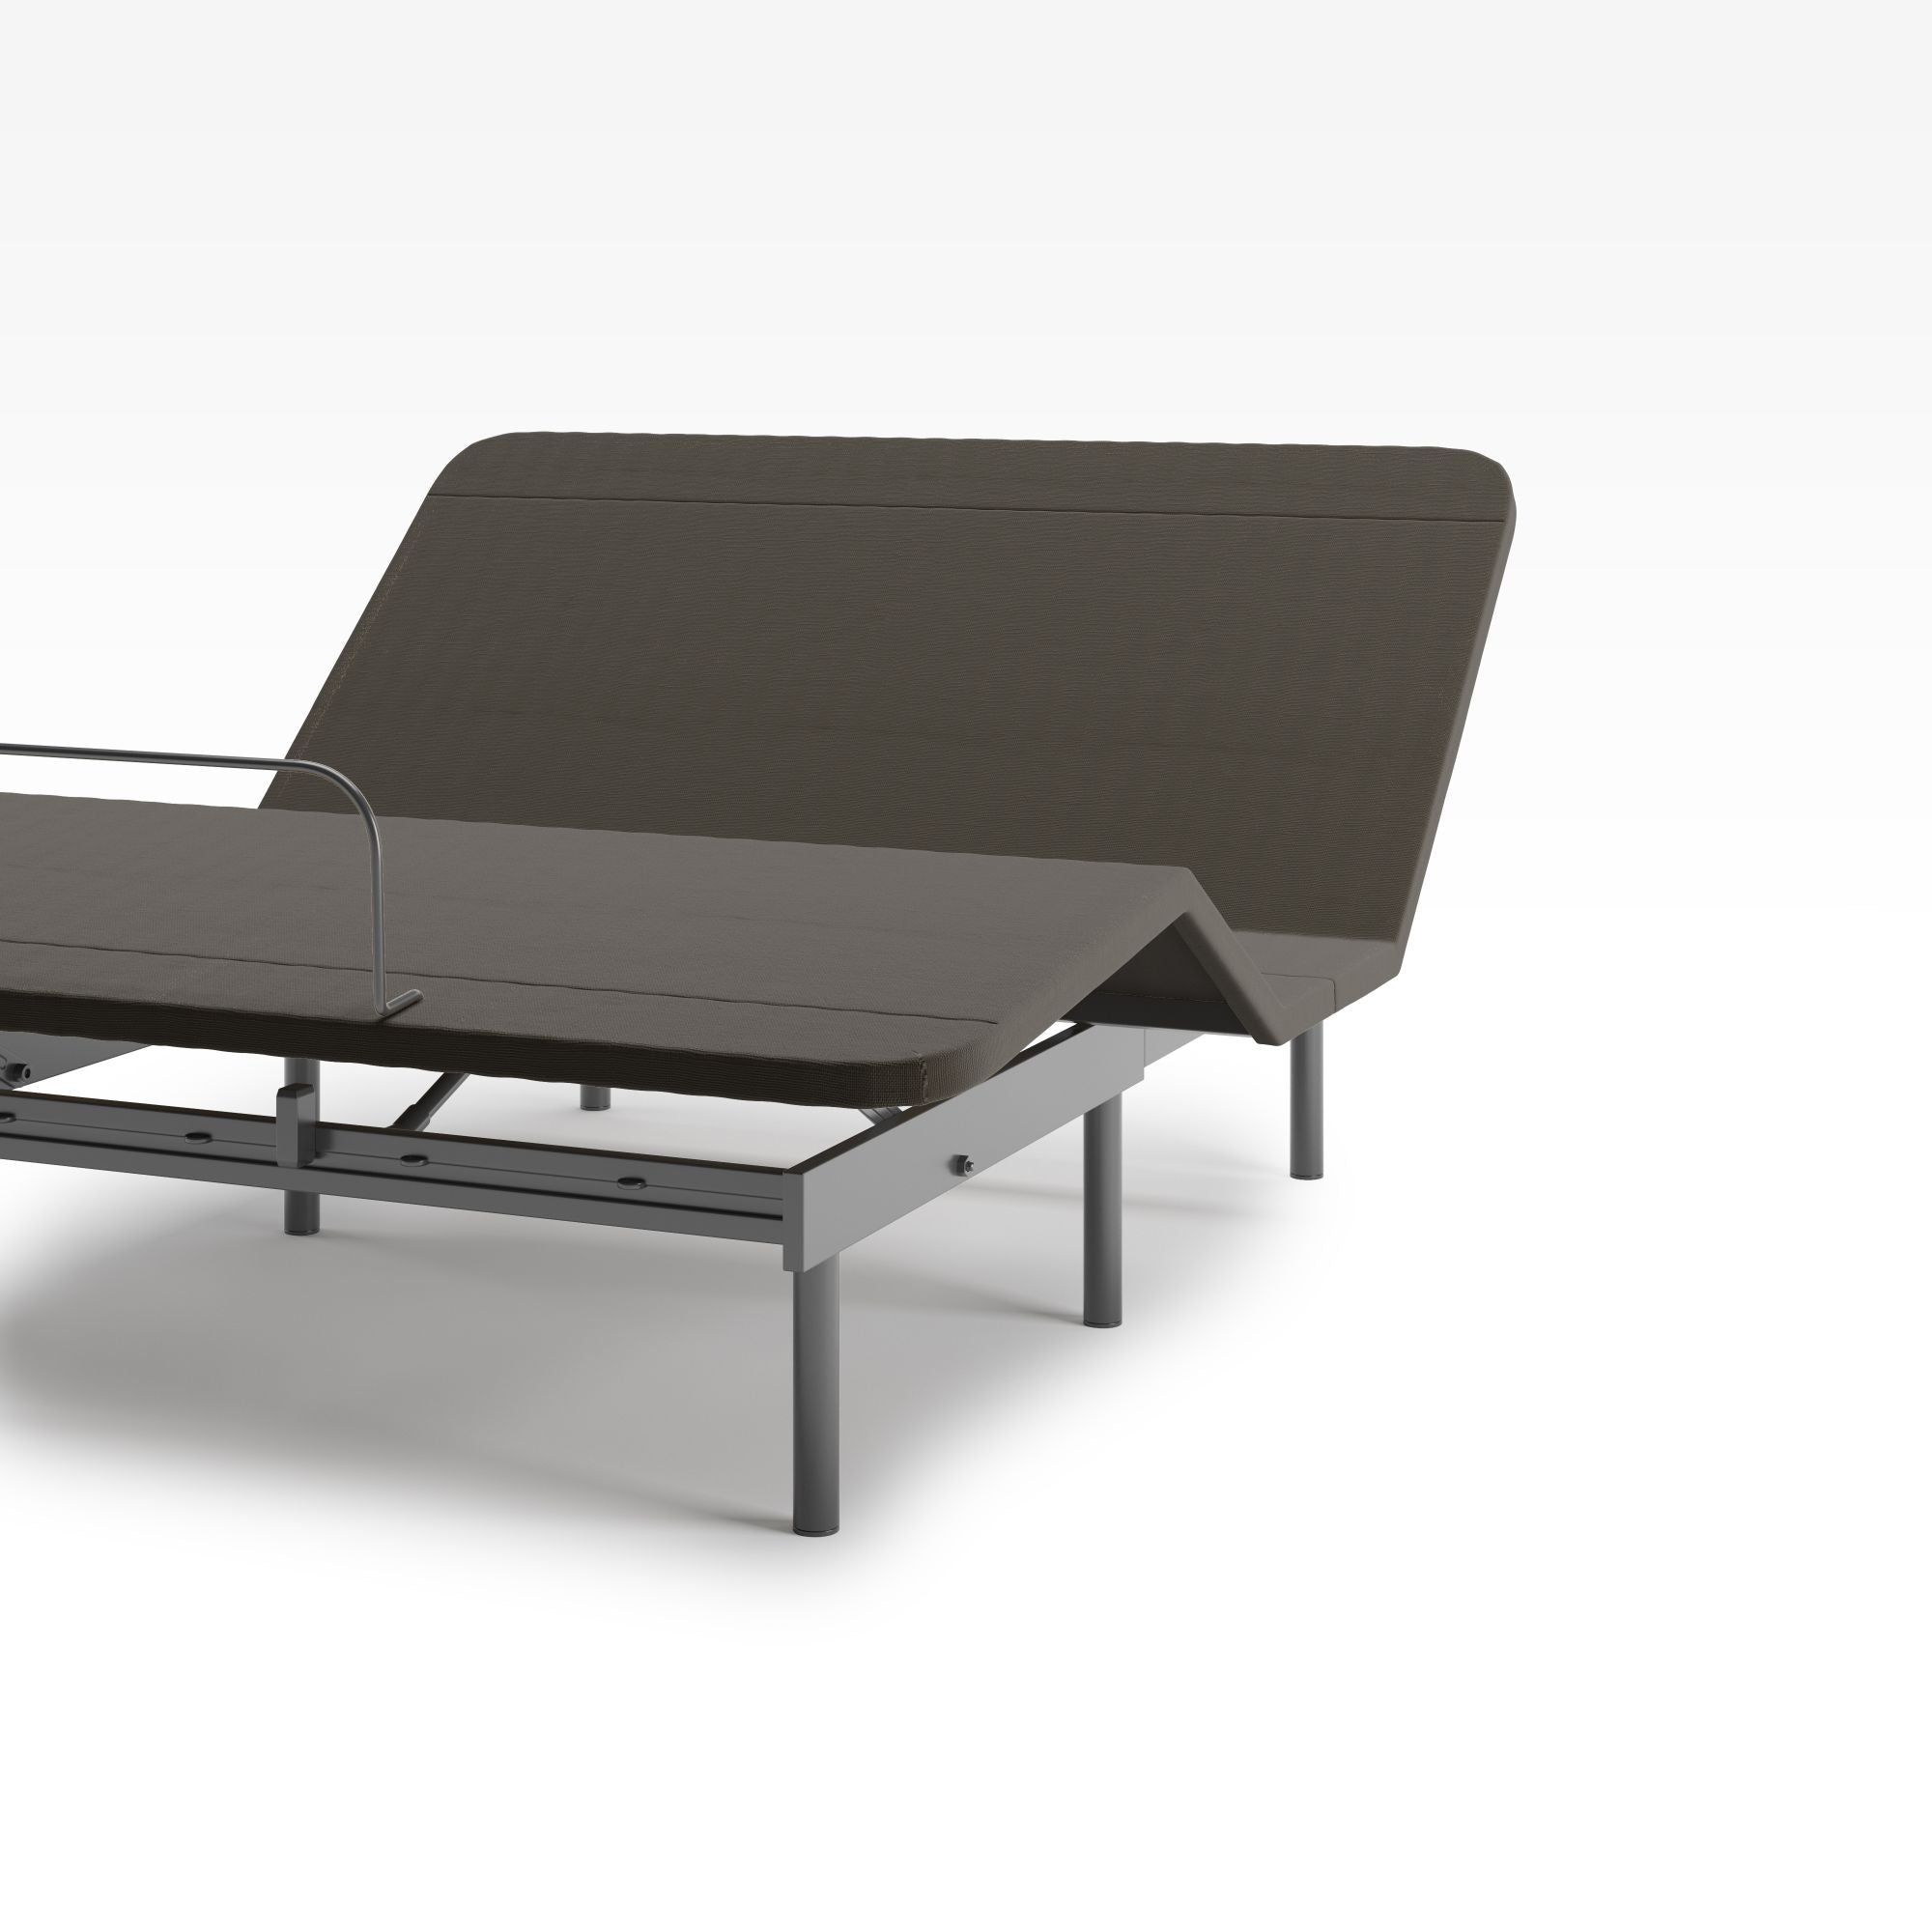 Upholstered Adjustable Bed Frame with Wireless remote Frame